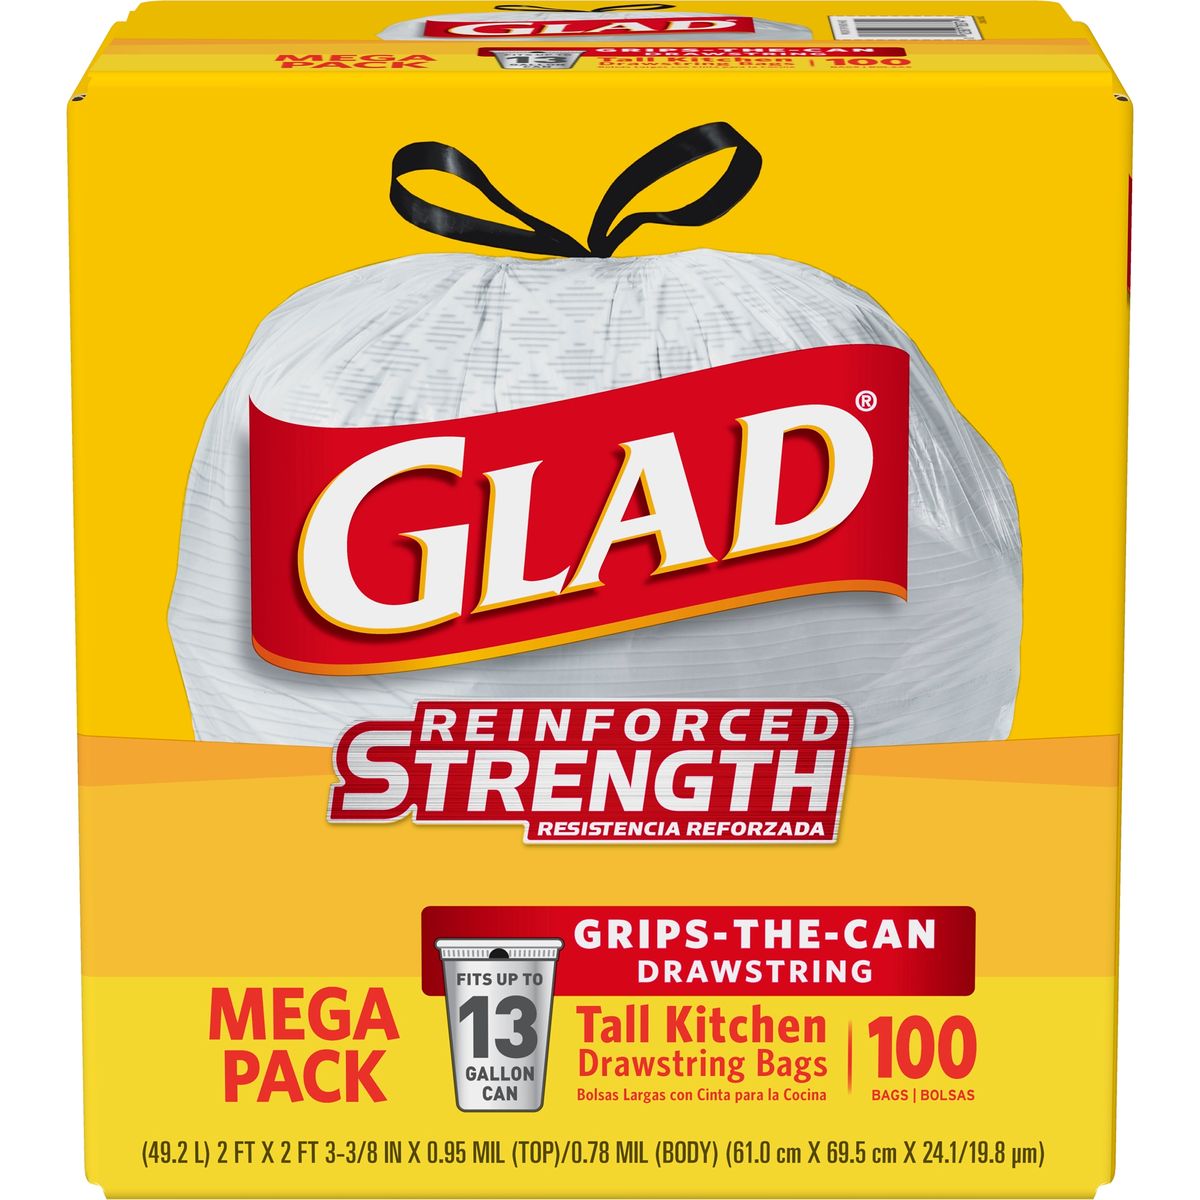 [RDY] [送料無料] Glad トールキッチン巾着ゴミ袋 - 13 gal - 100 ct [楽天海外通販] | Glad Tall Kitchen Drawstring Trash Bags - 13 gal - 100 ct